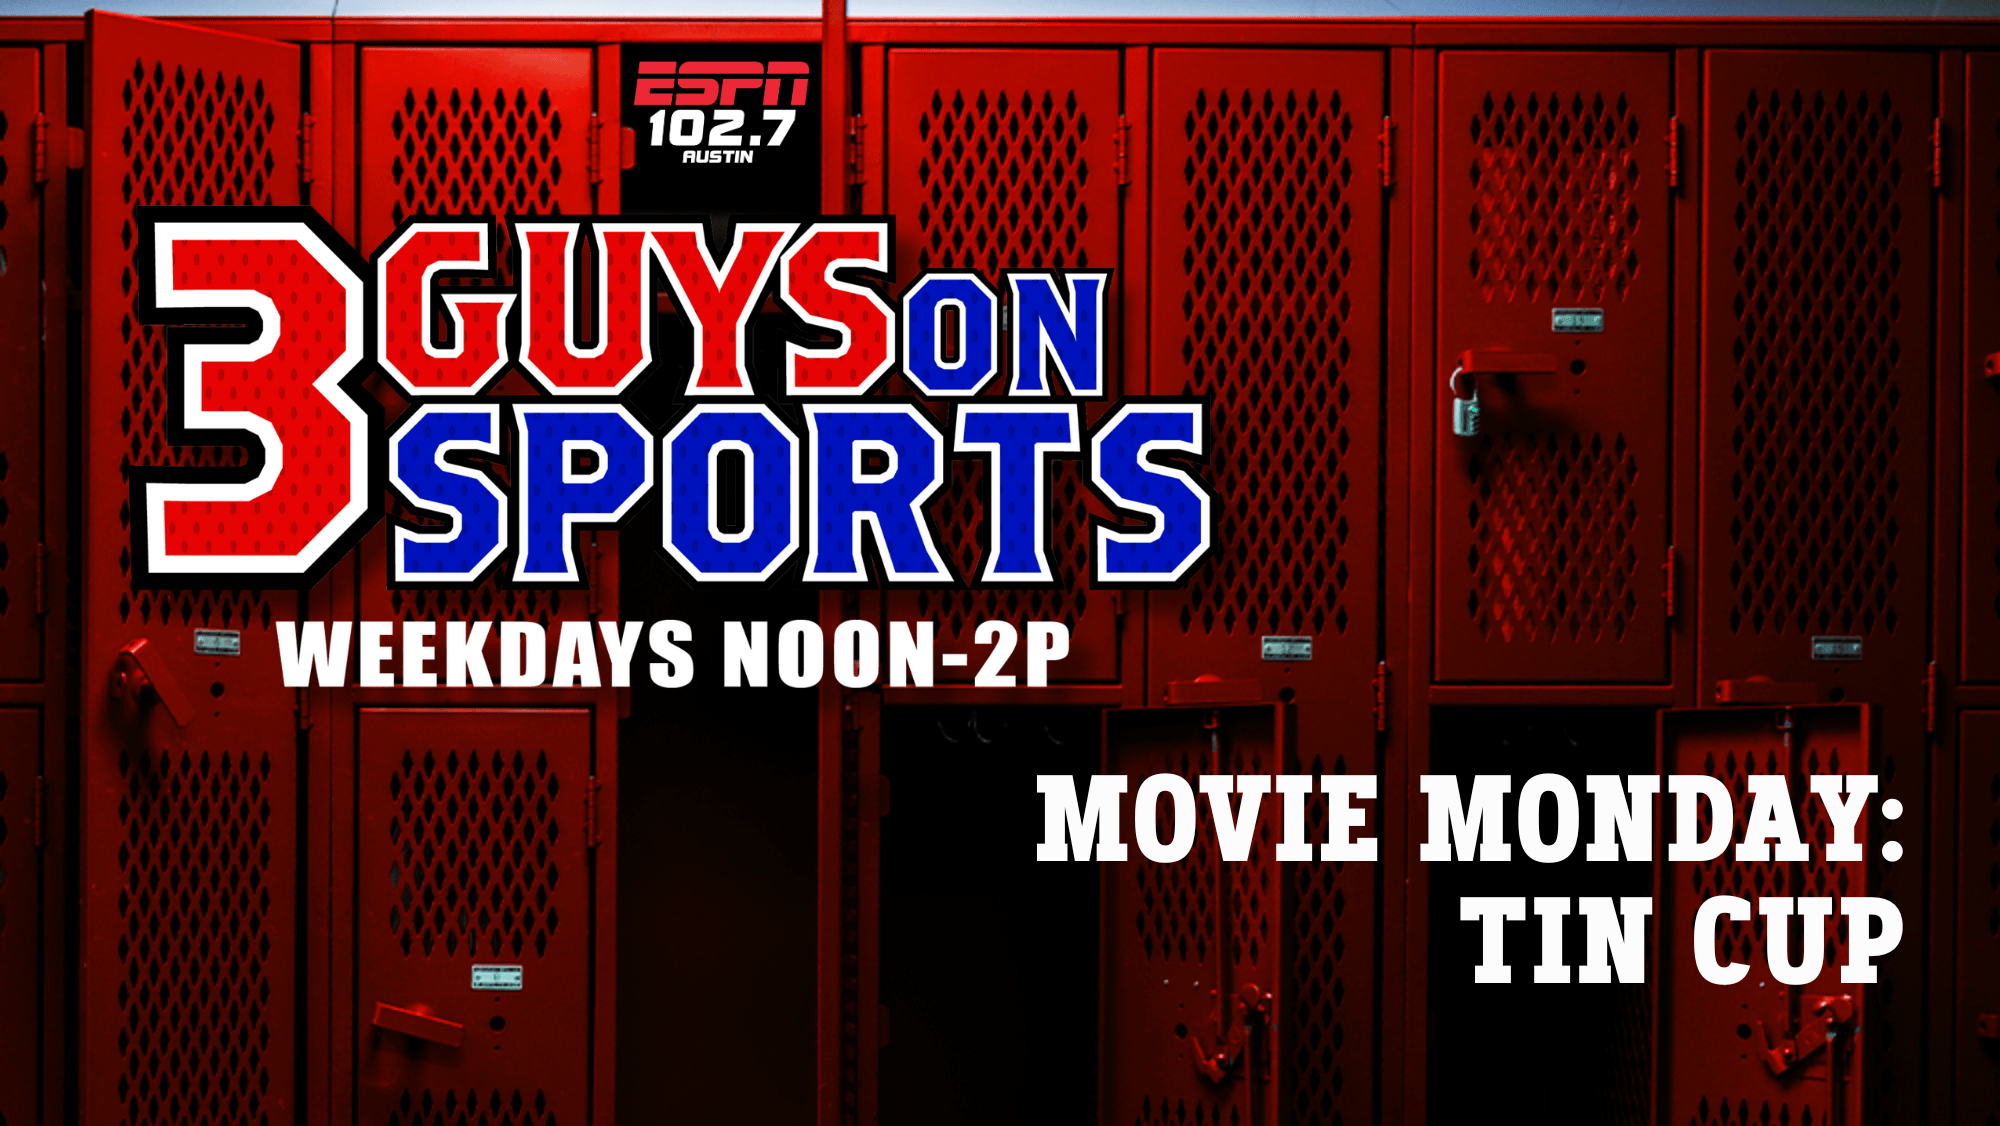 3 Guys on Sports - Movie Monday: Tin Cup